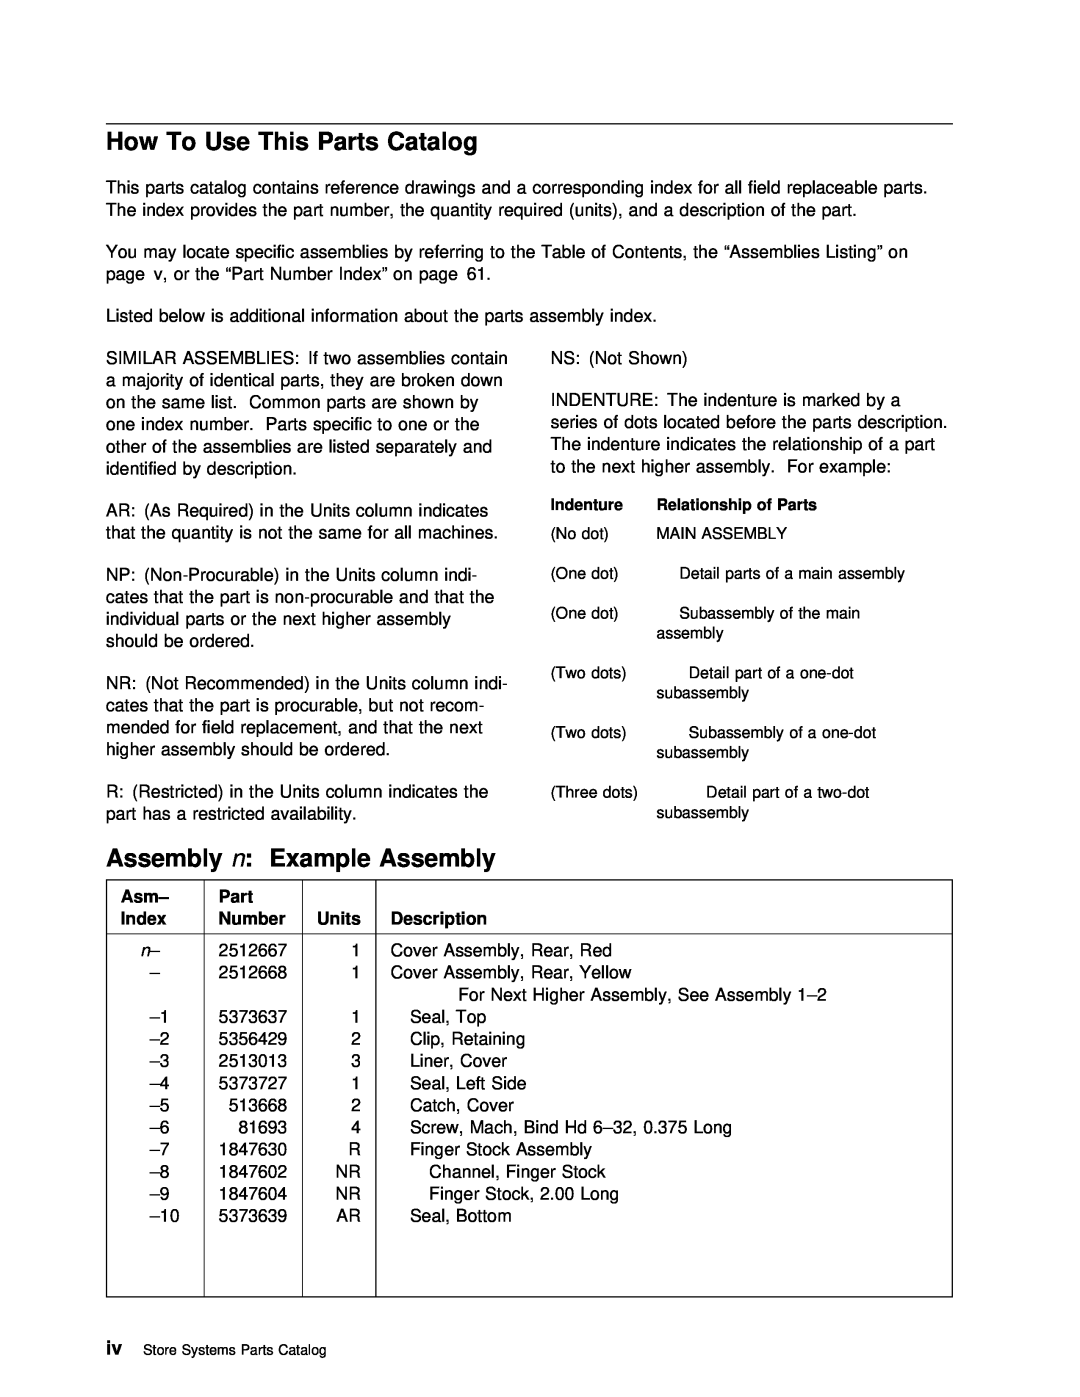 IBM 4693 DBCS FAMILY, 4694 DBCS FAMILY manual This, Catalog, Parts, Example Assembly, Index, Description 